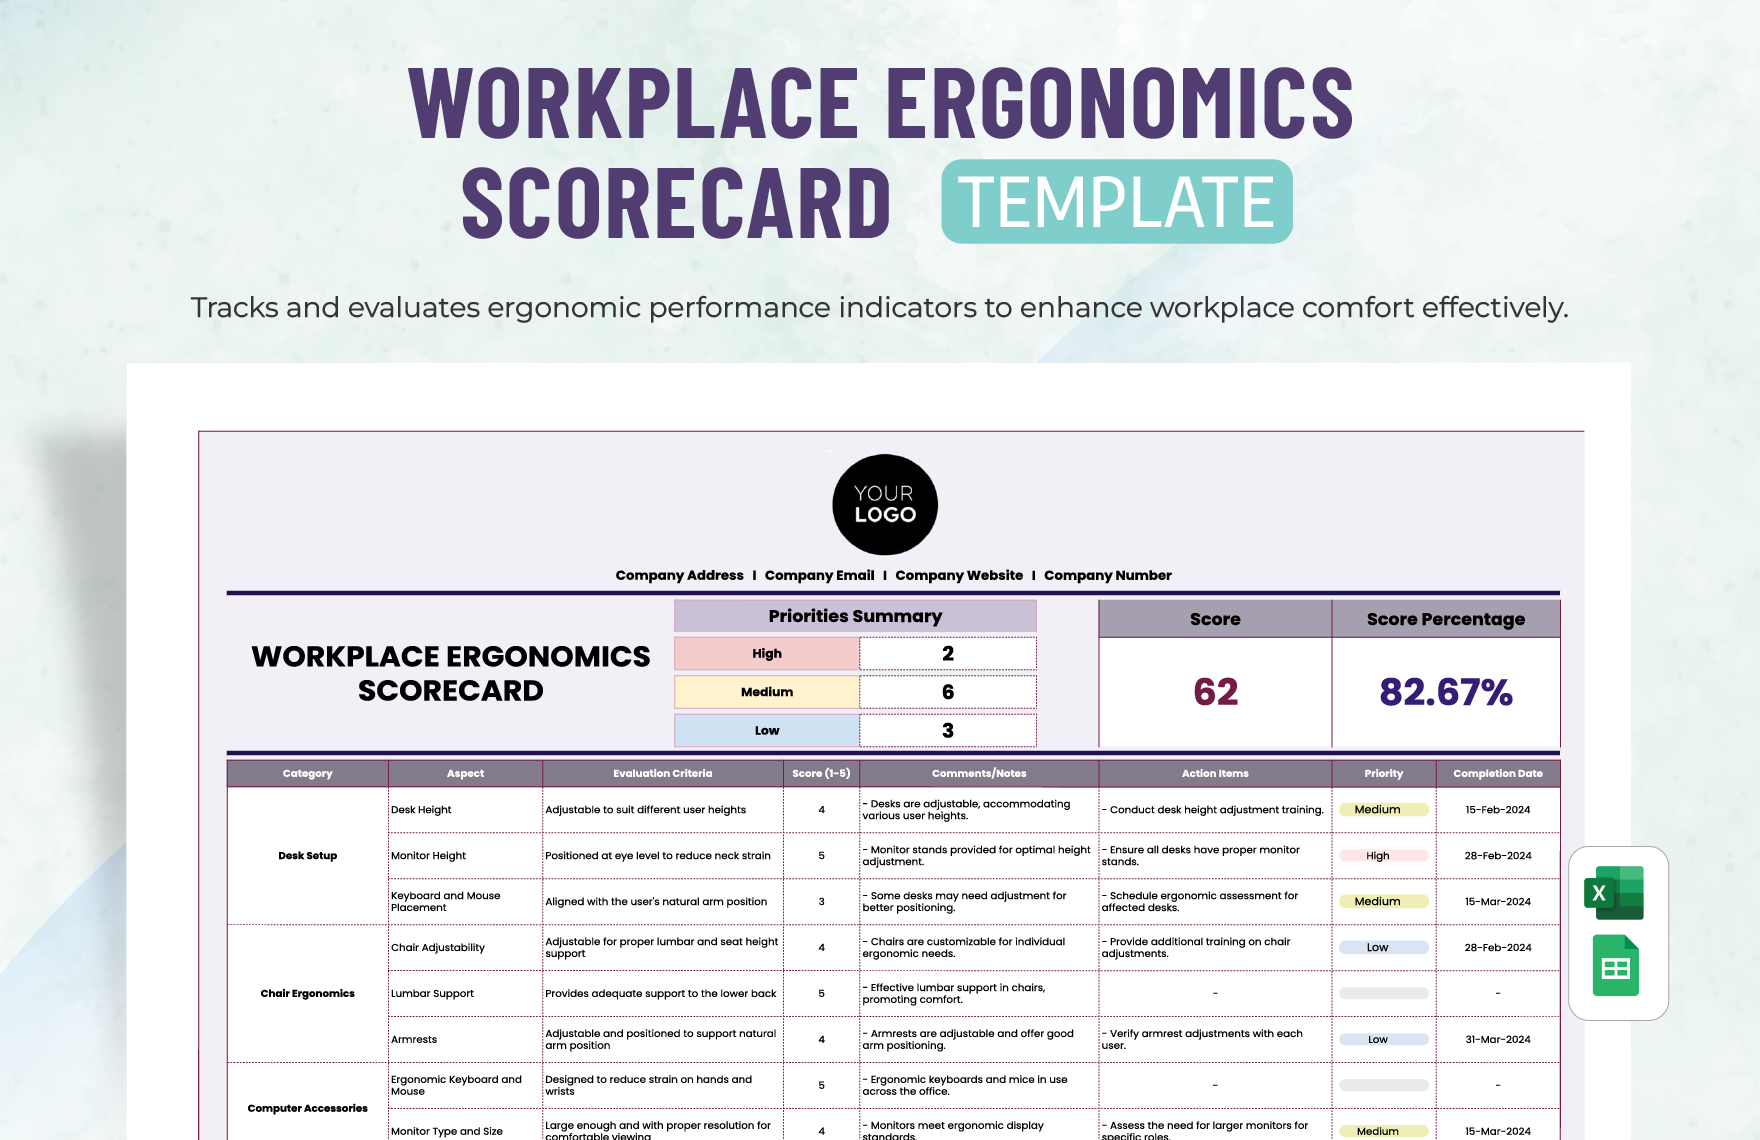 Workplace Ergonomics Scorecard Template in Excel, Google Sheets